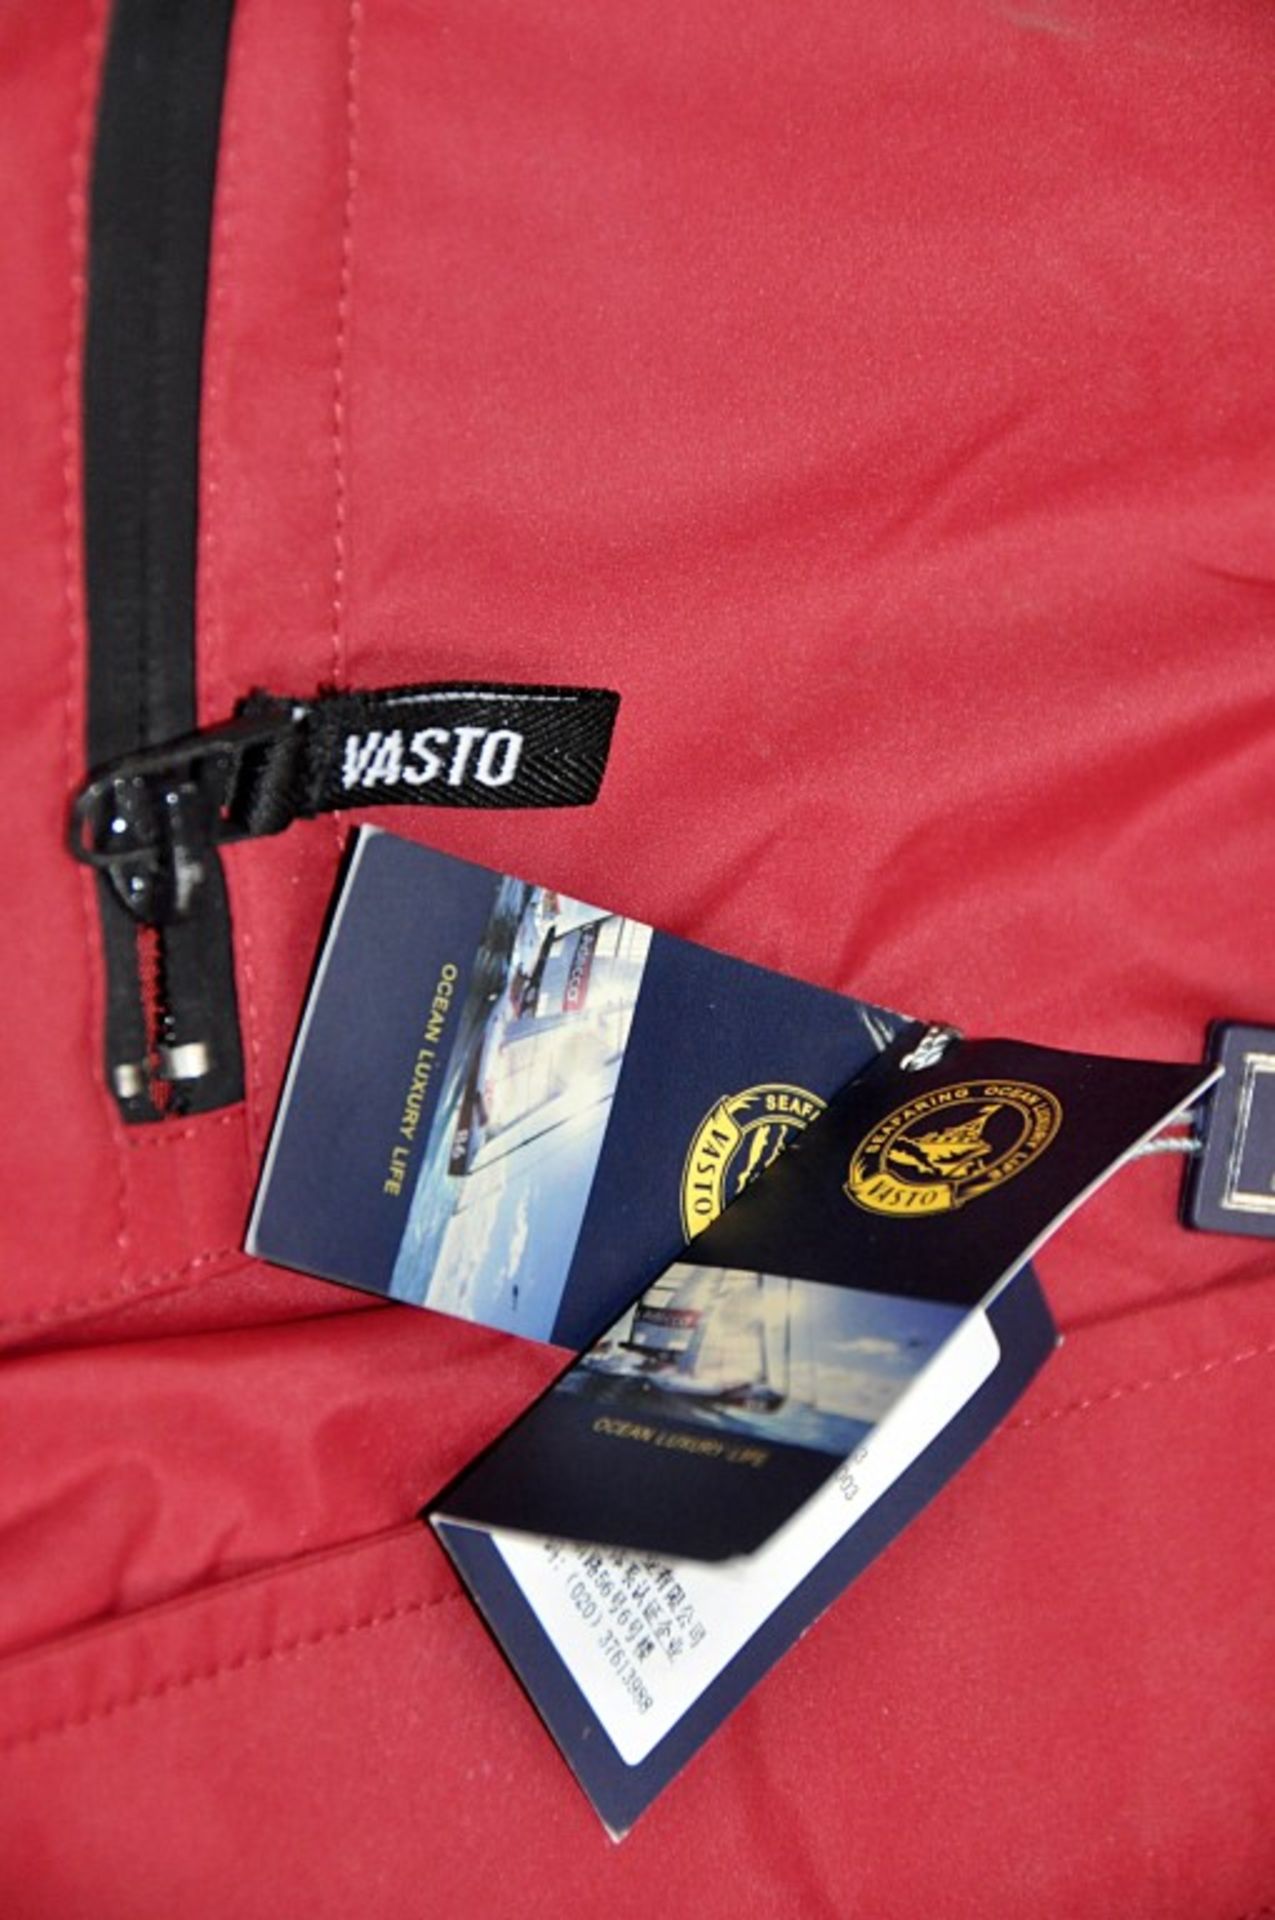 1 x Men's Hooded Seafaring Jacket By International Luxury Brand "Vasto" (SAZ7231/431) – Size: Medium - Image 4 of 7